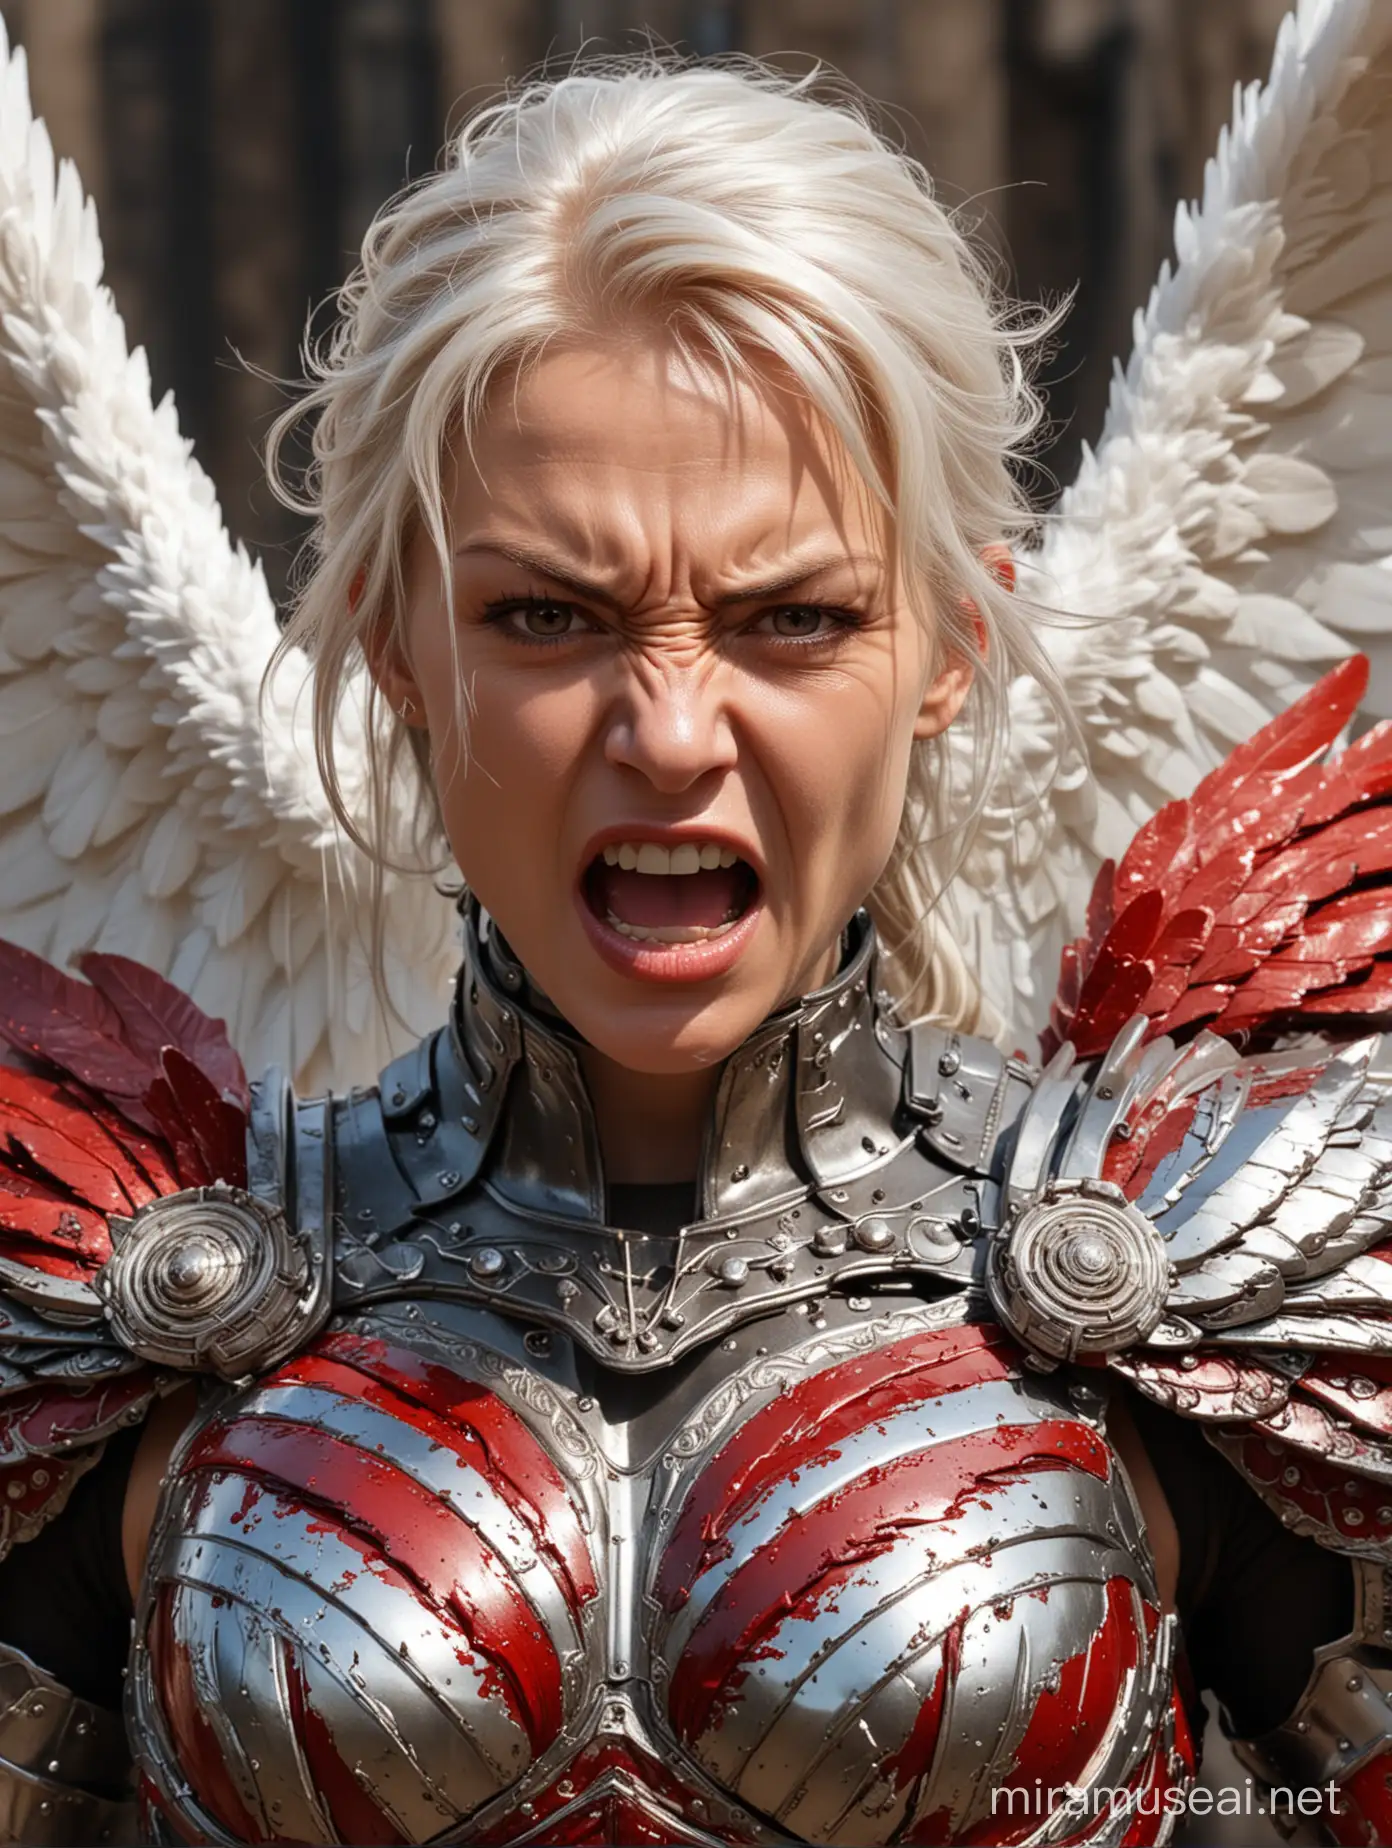 Fierce Female Angel in Crimson Armor Screaming with Rage